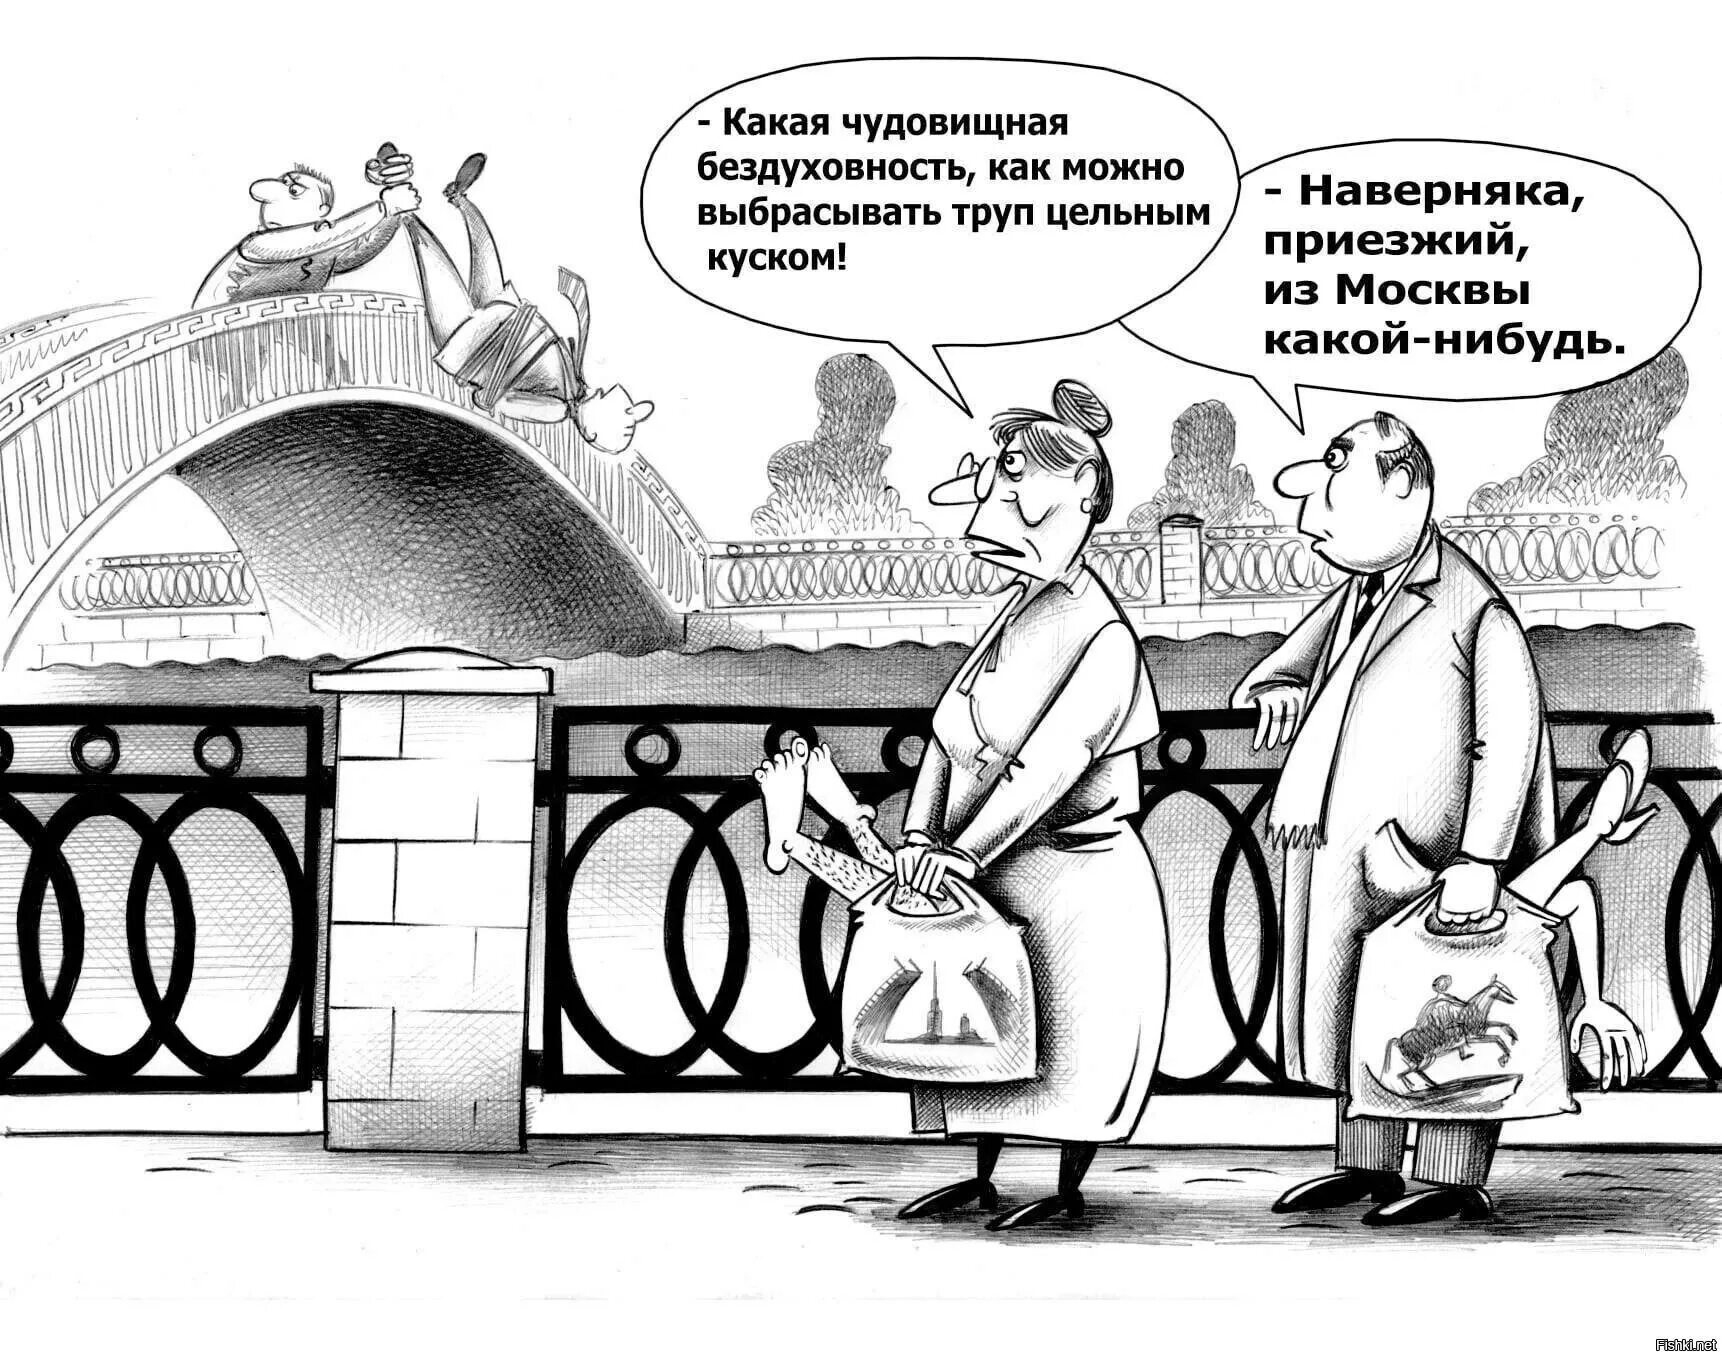 Шутки про Петербург и расчлененку. Карикатура. Современные карикатуры. Шутки про Питер и расчлененку. В чем заключалось вопиющее дело